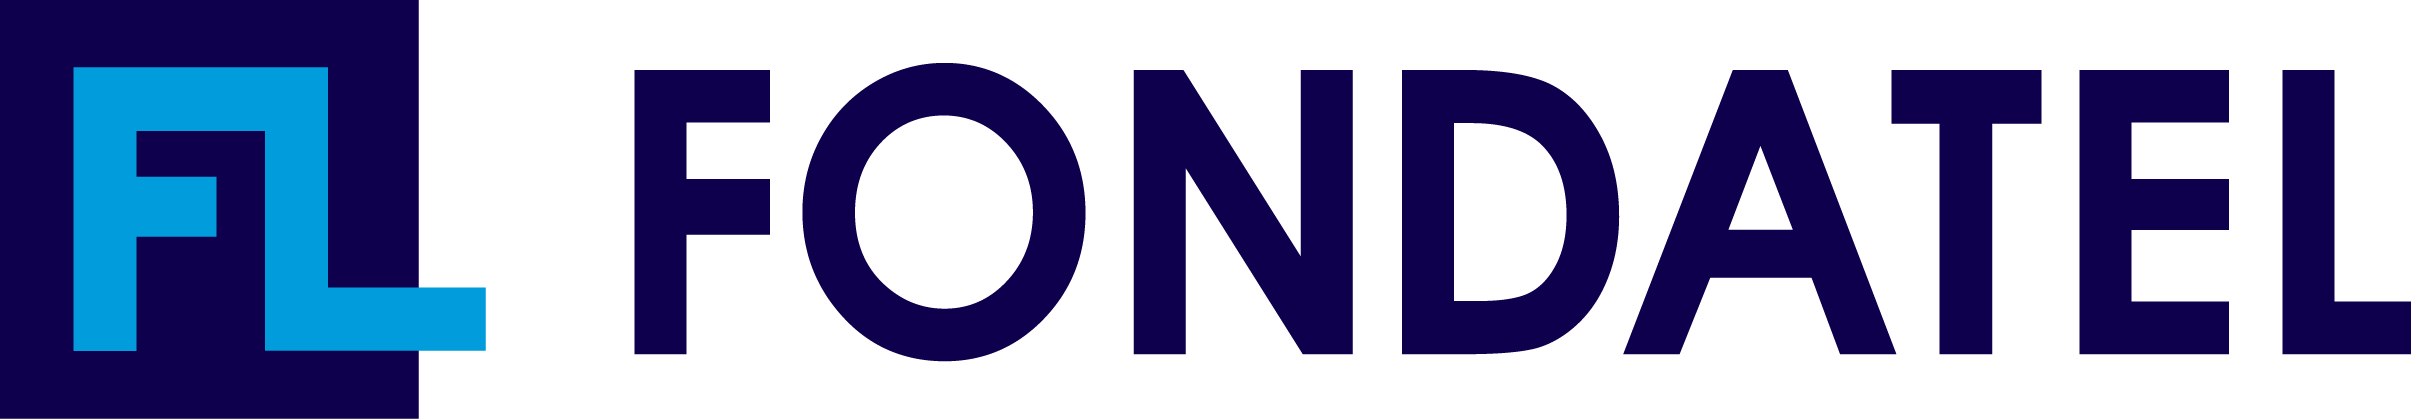 logo FONDATEL